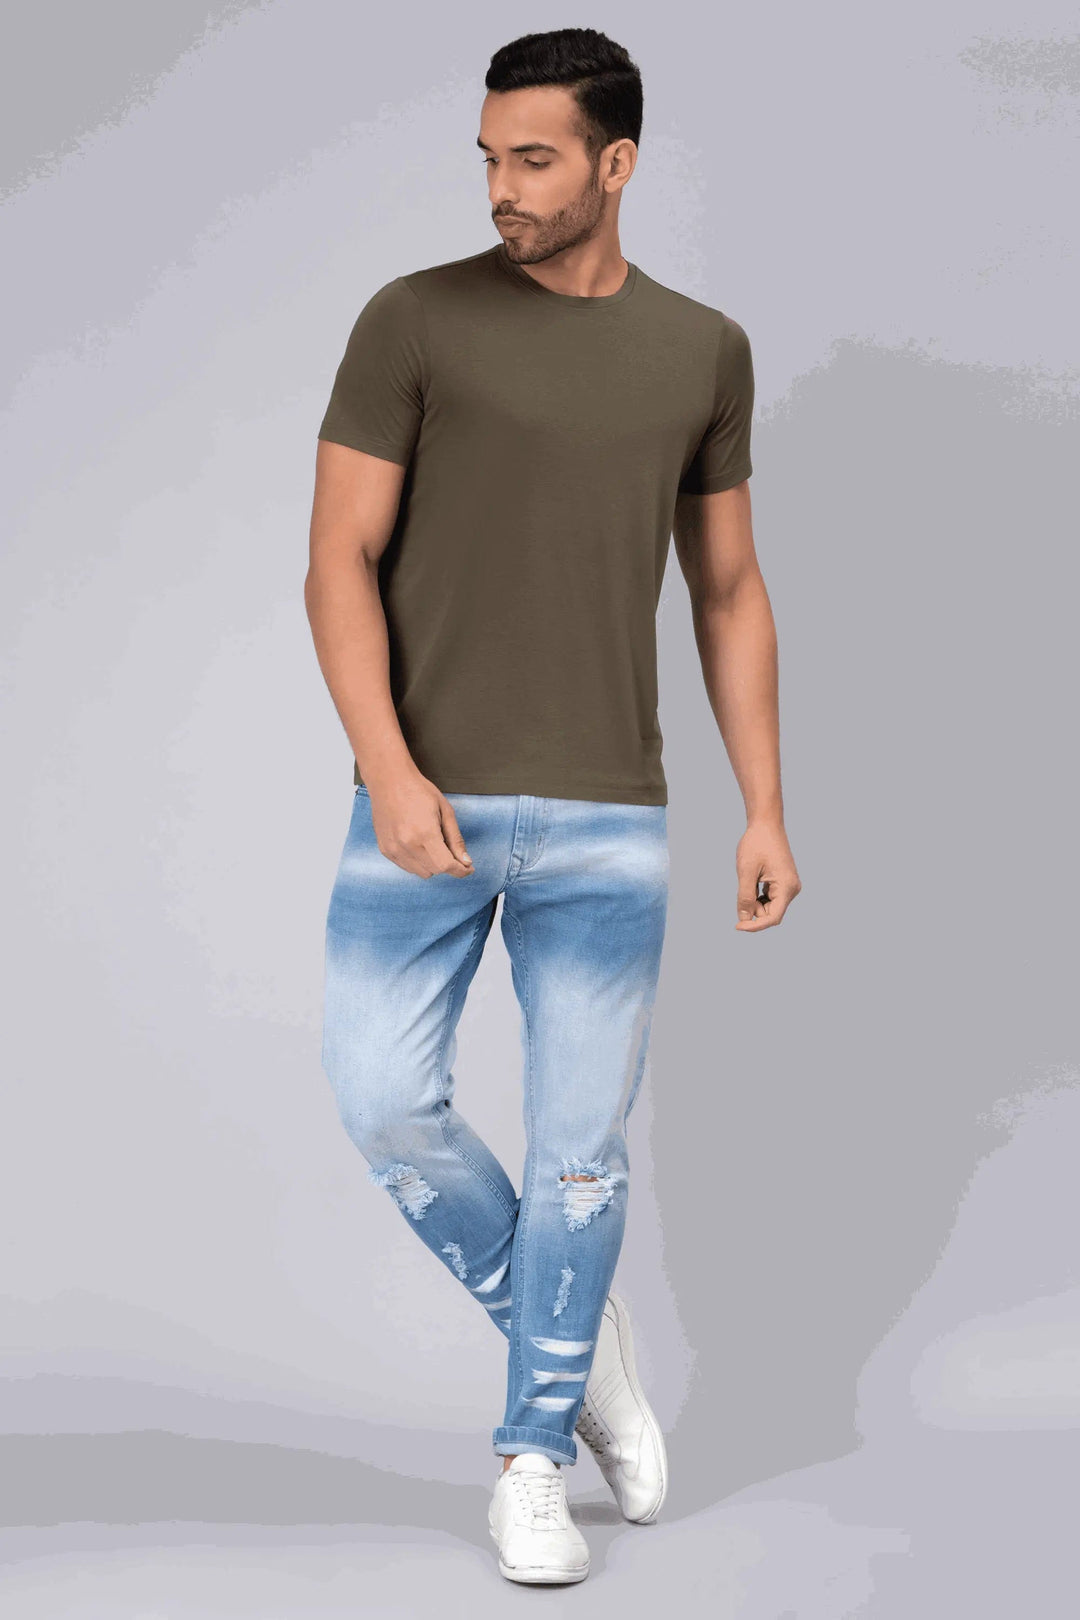 Ankle Fit Shade Blue Rough Look Premium Denim Jeans For men - Peplos Jeans 